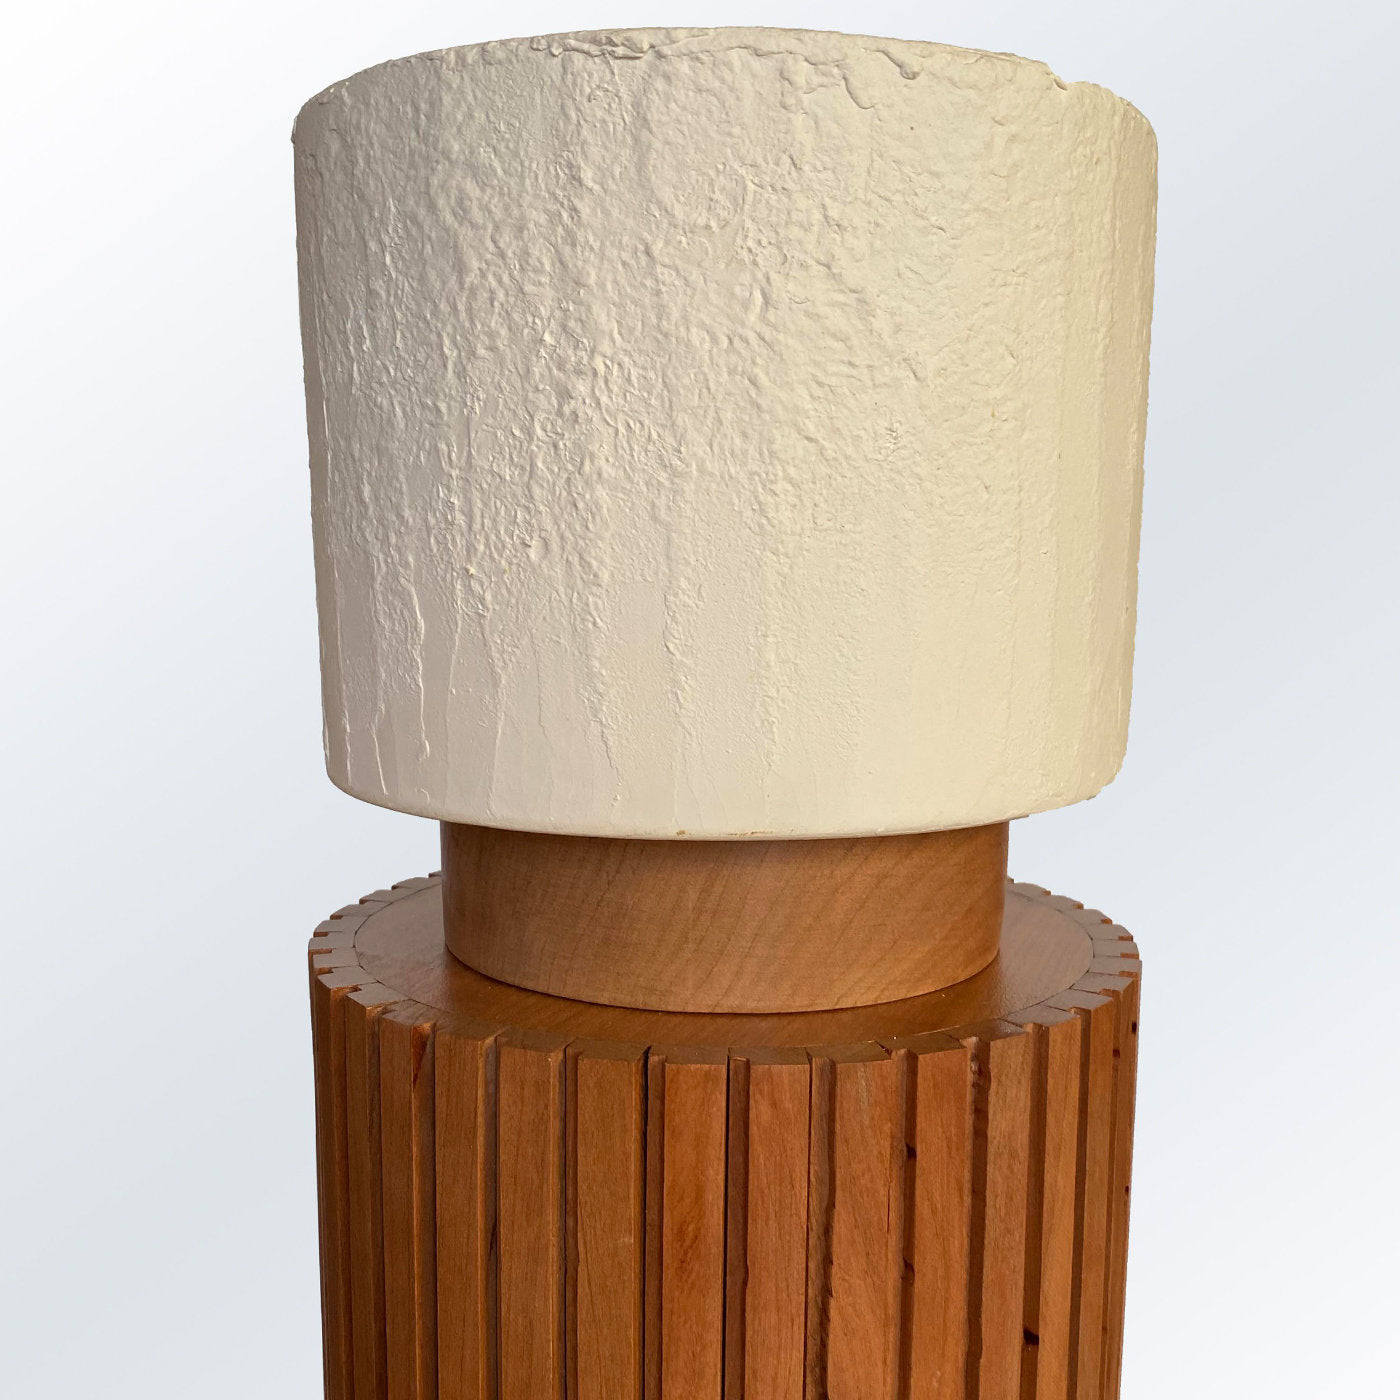 Totem Table Lamp by Mascia Meccani #9 - Alternative view 2